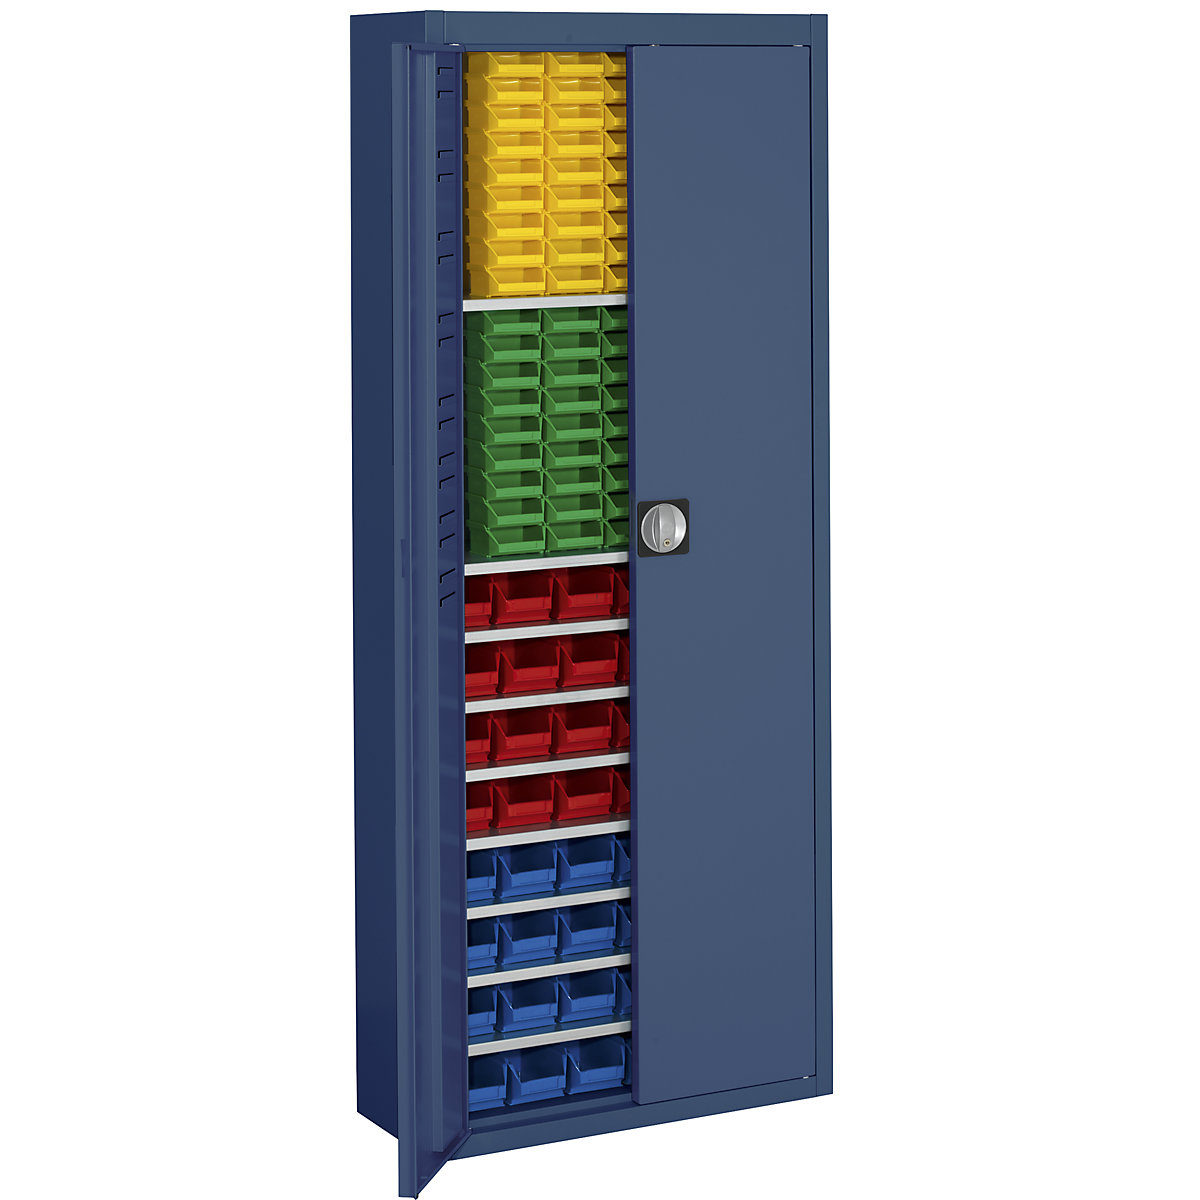 Storage cupboard with open fronted storage bins – mauser, HxWxD 1740 x 680 x 280 mm, single colour, blue, 138 bins-14